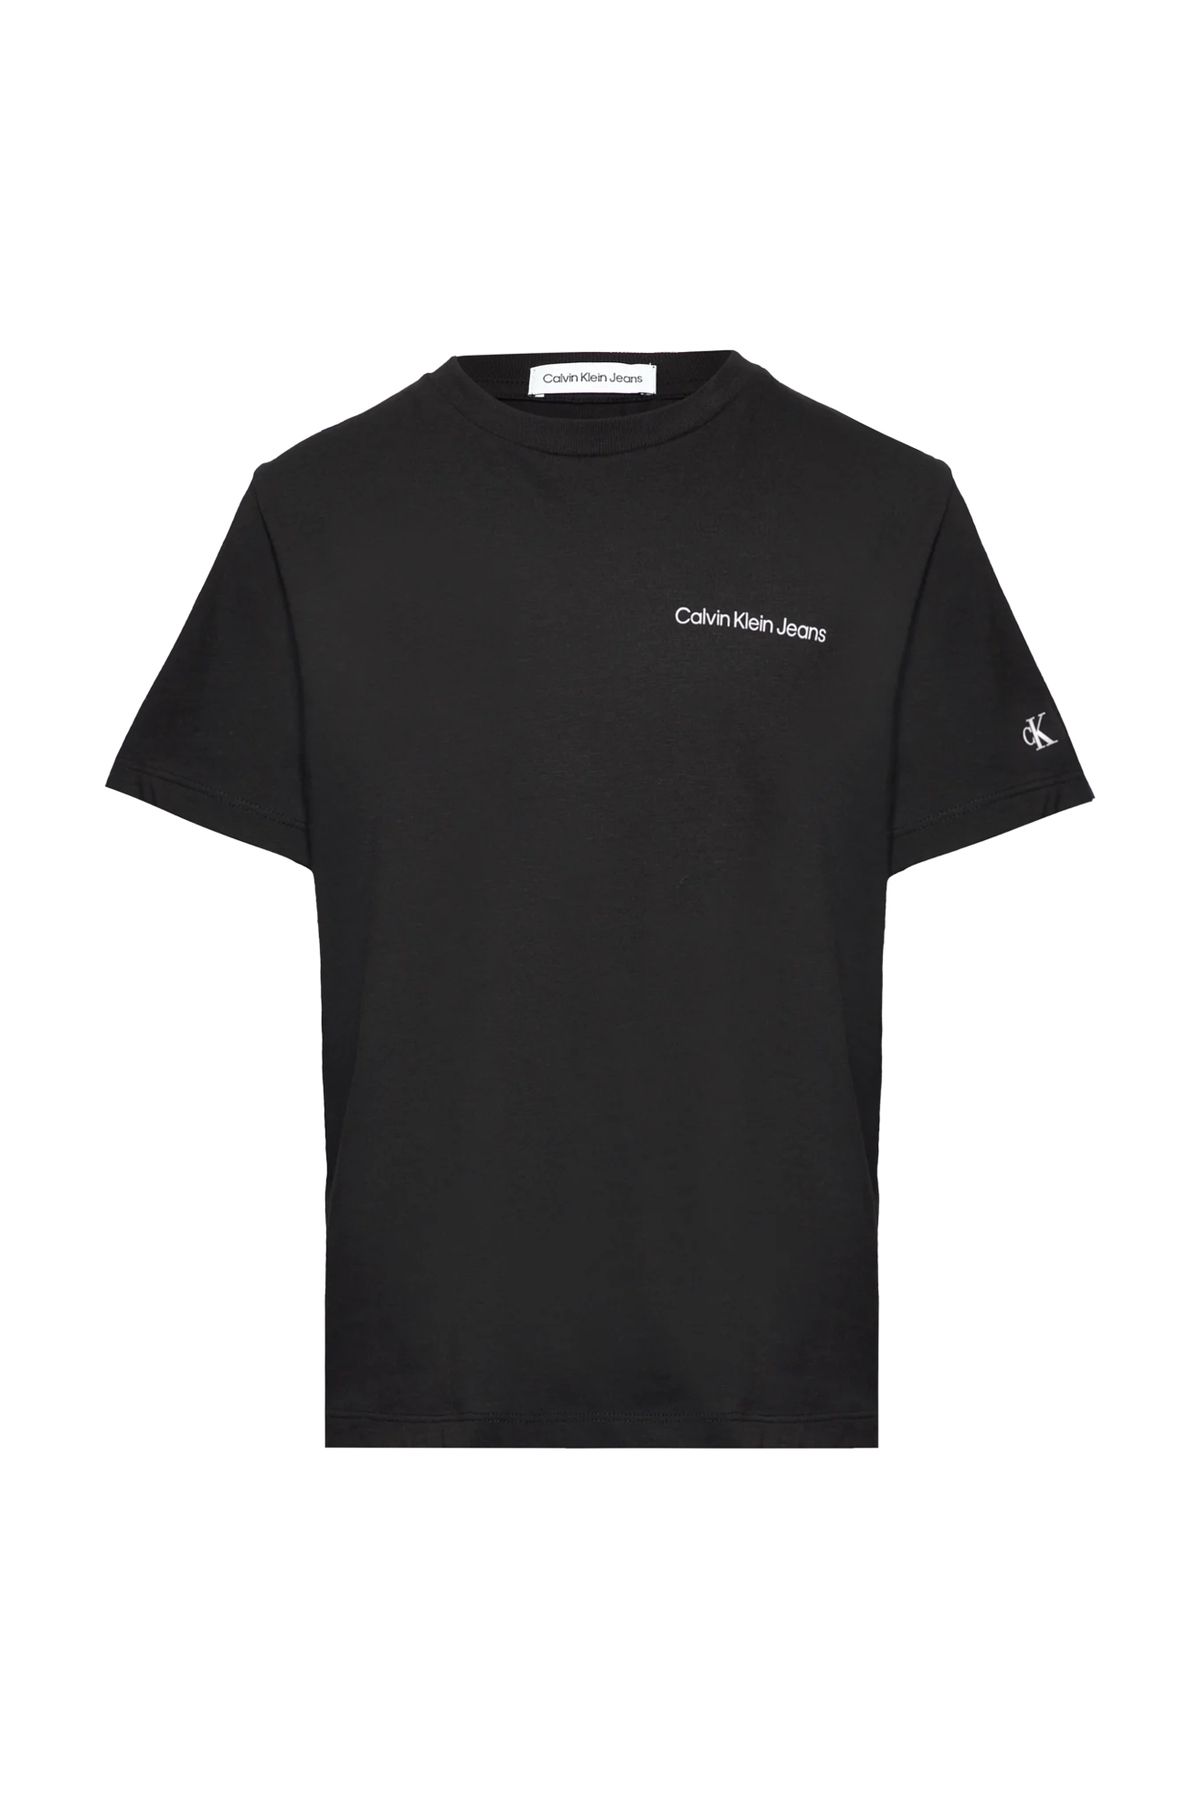 Calvin Klein Baskılı Siyah Erkek Çocuk T-Shirt CHEST INST. LOGO SS T-SHIRT